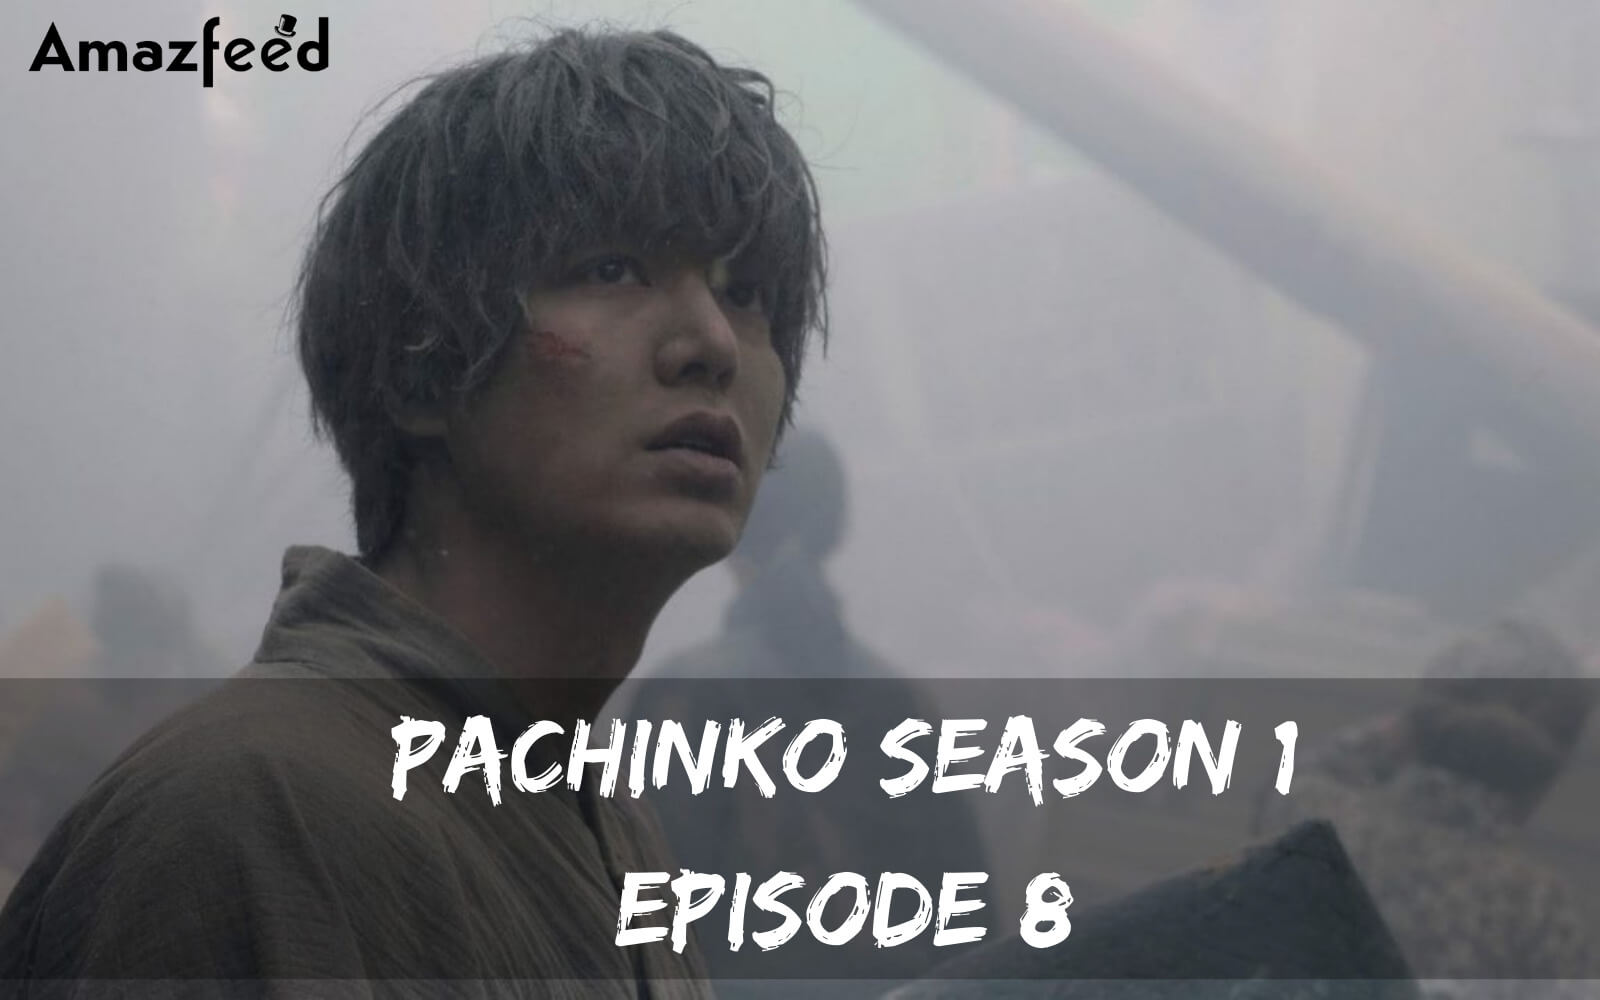 Pachinko Season 1 Episode 8 release date